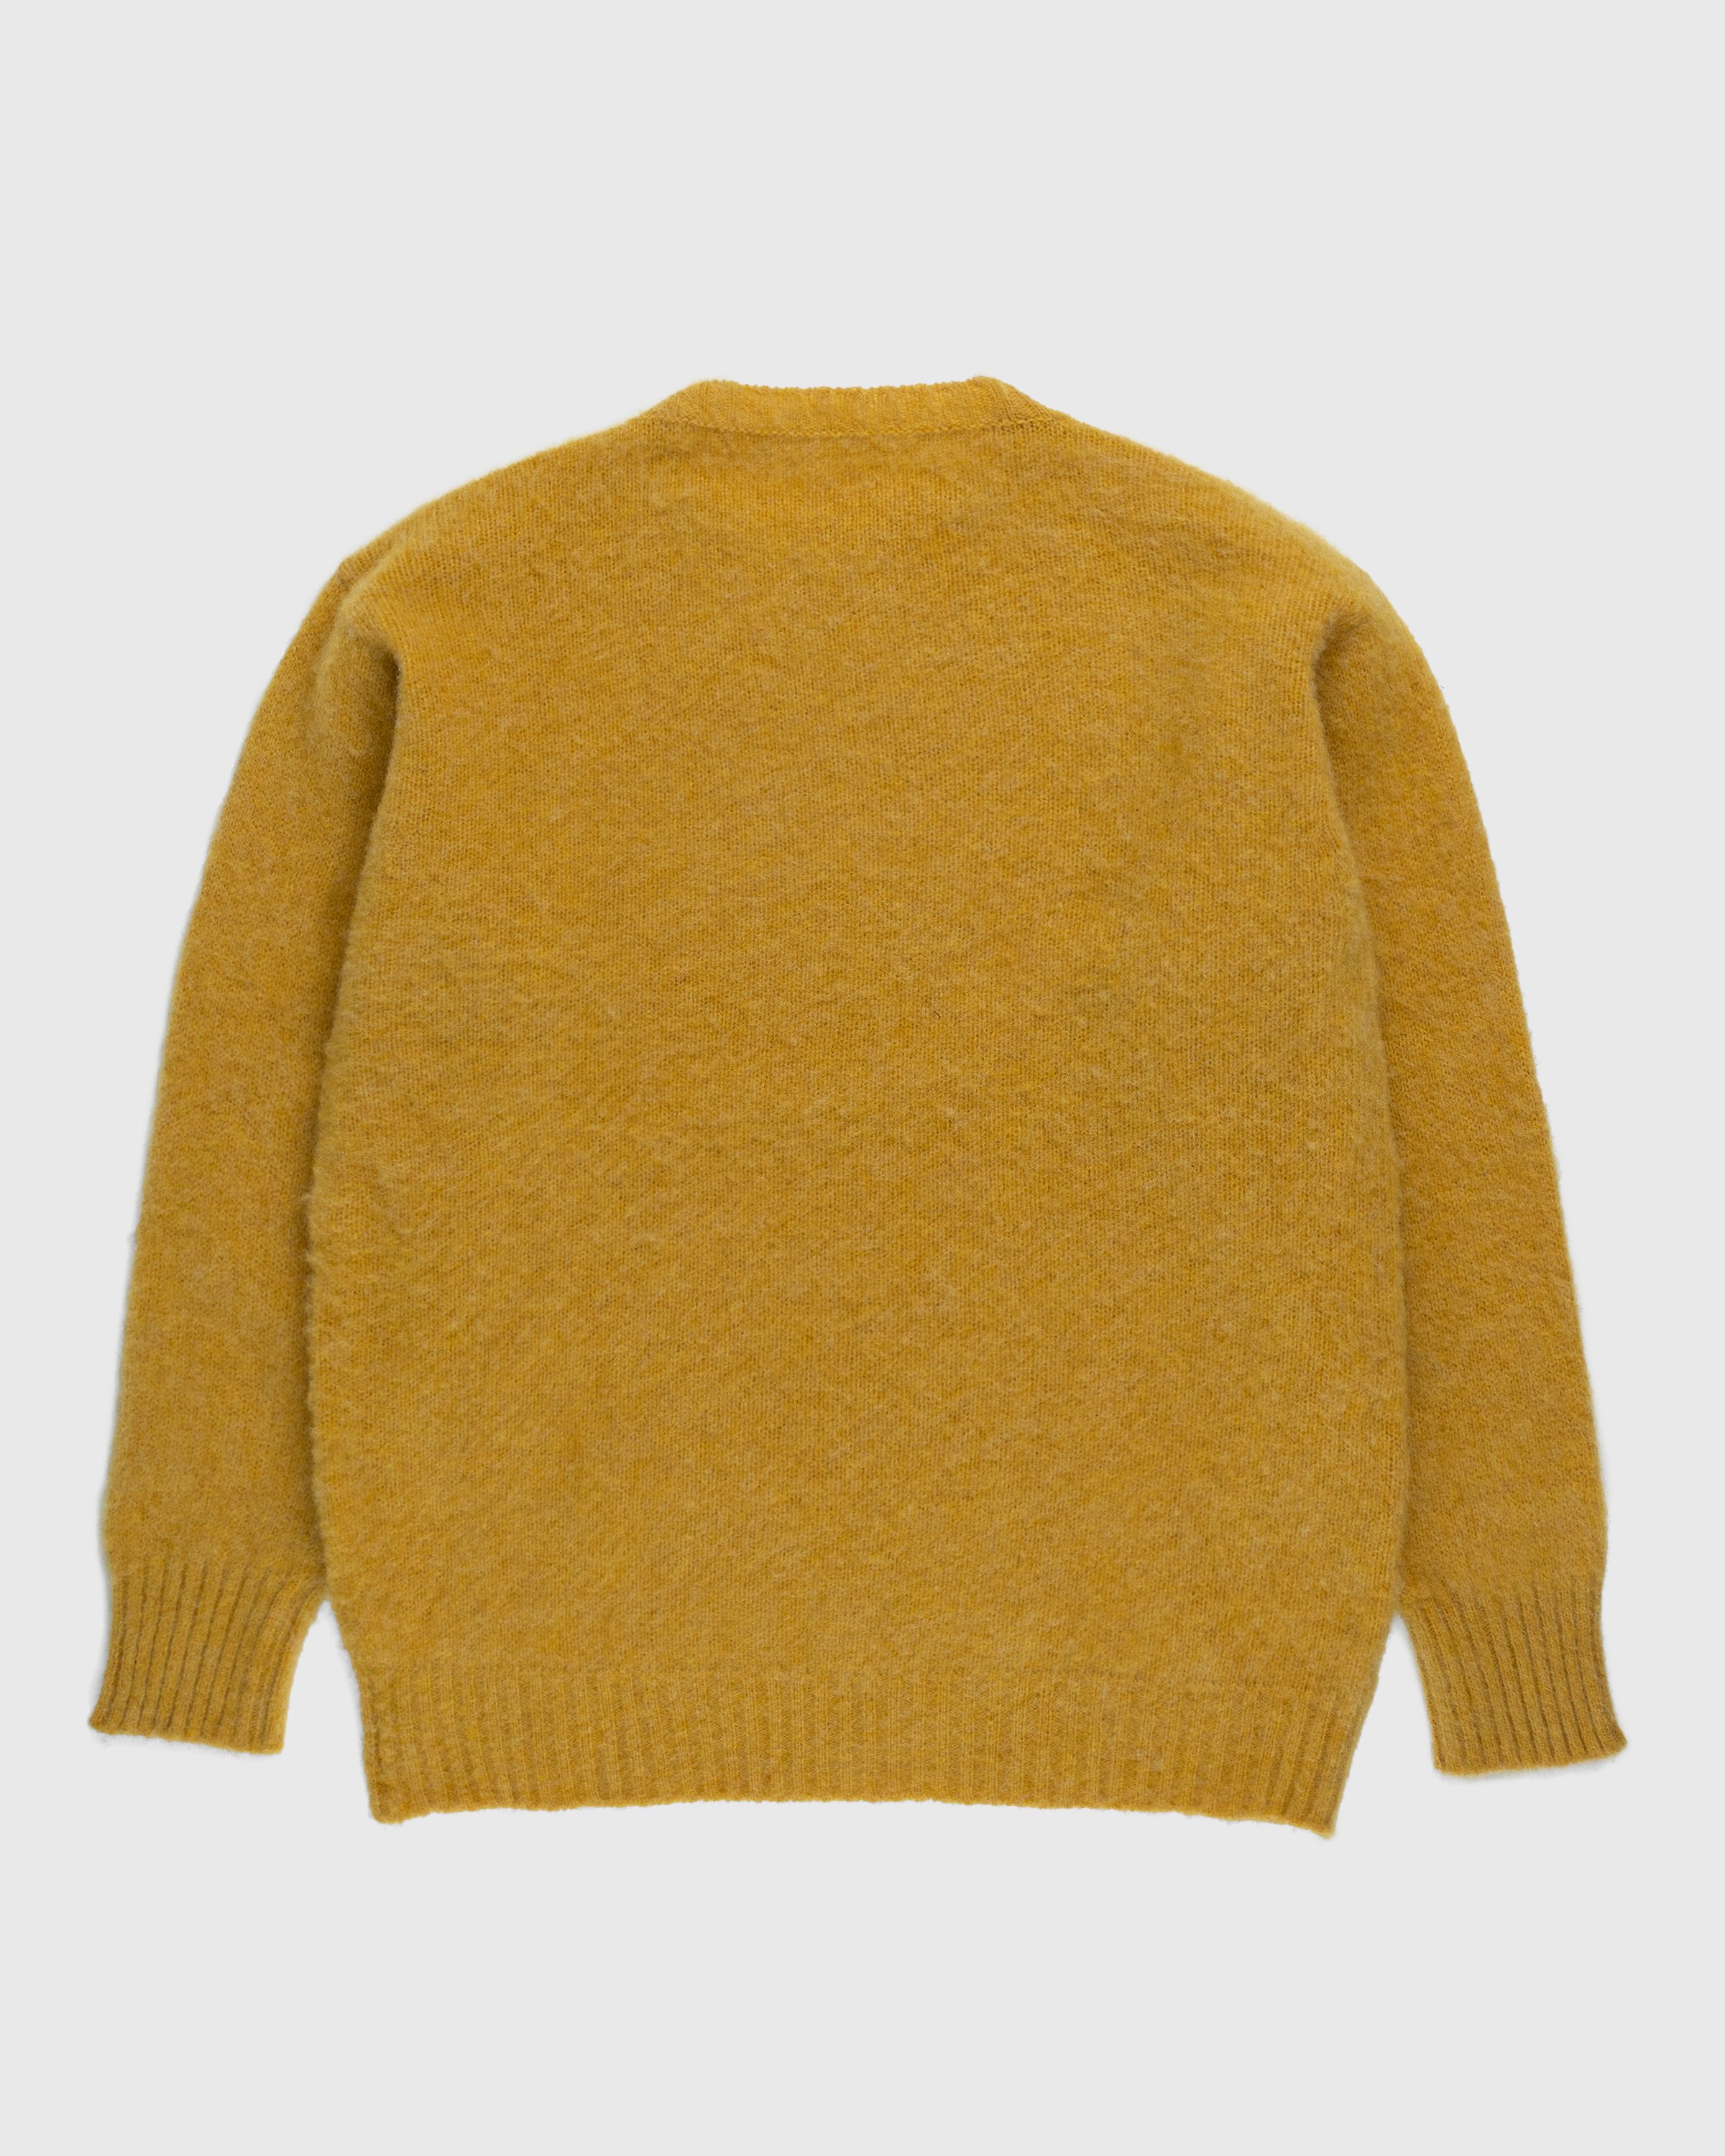 J. Press x Highsnobiety - Shaggy Dog Solid Sweater Yellow - Clothing - Yellow - Image 2